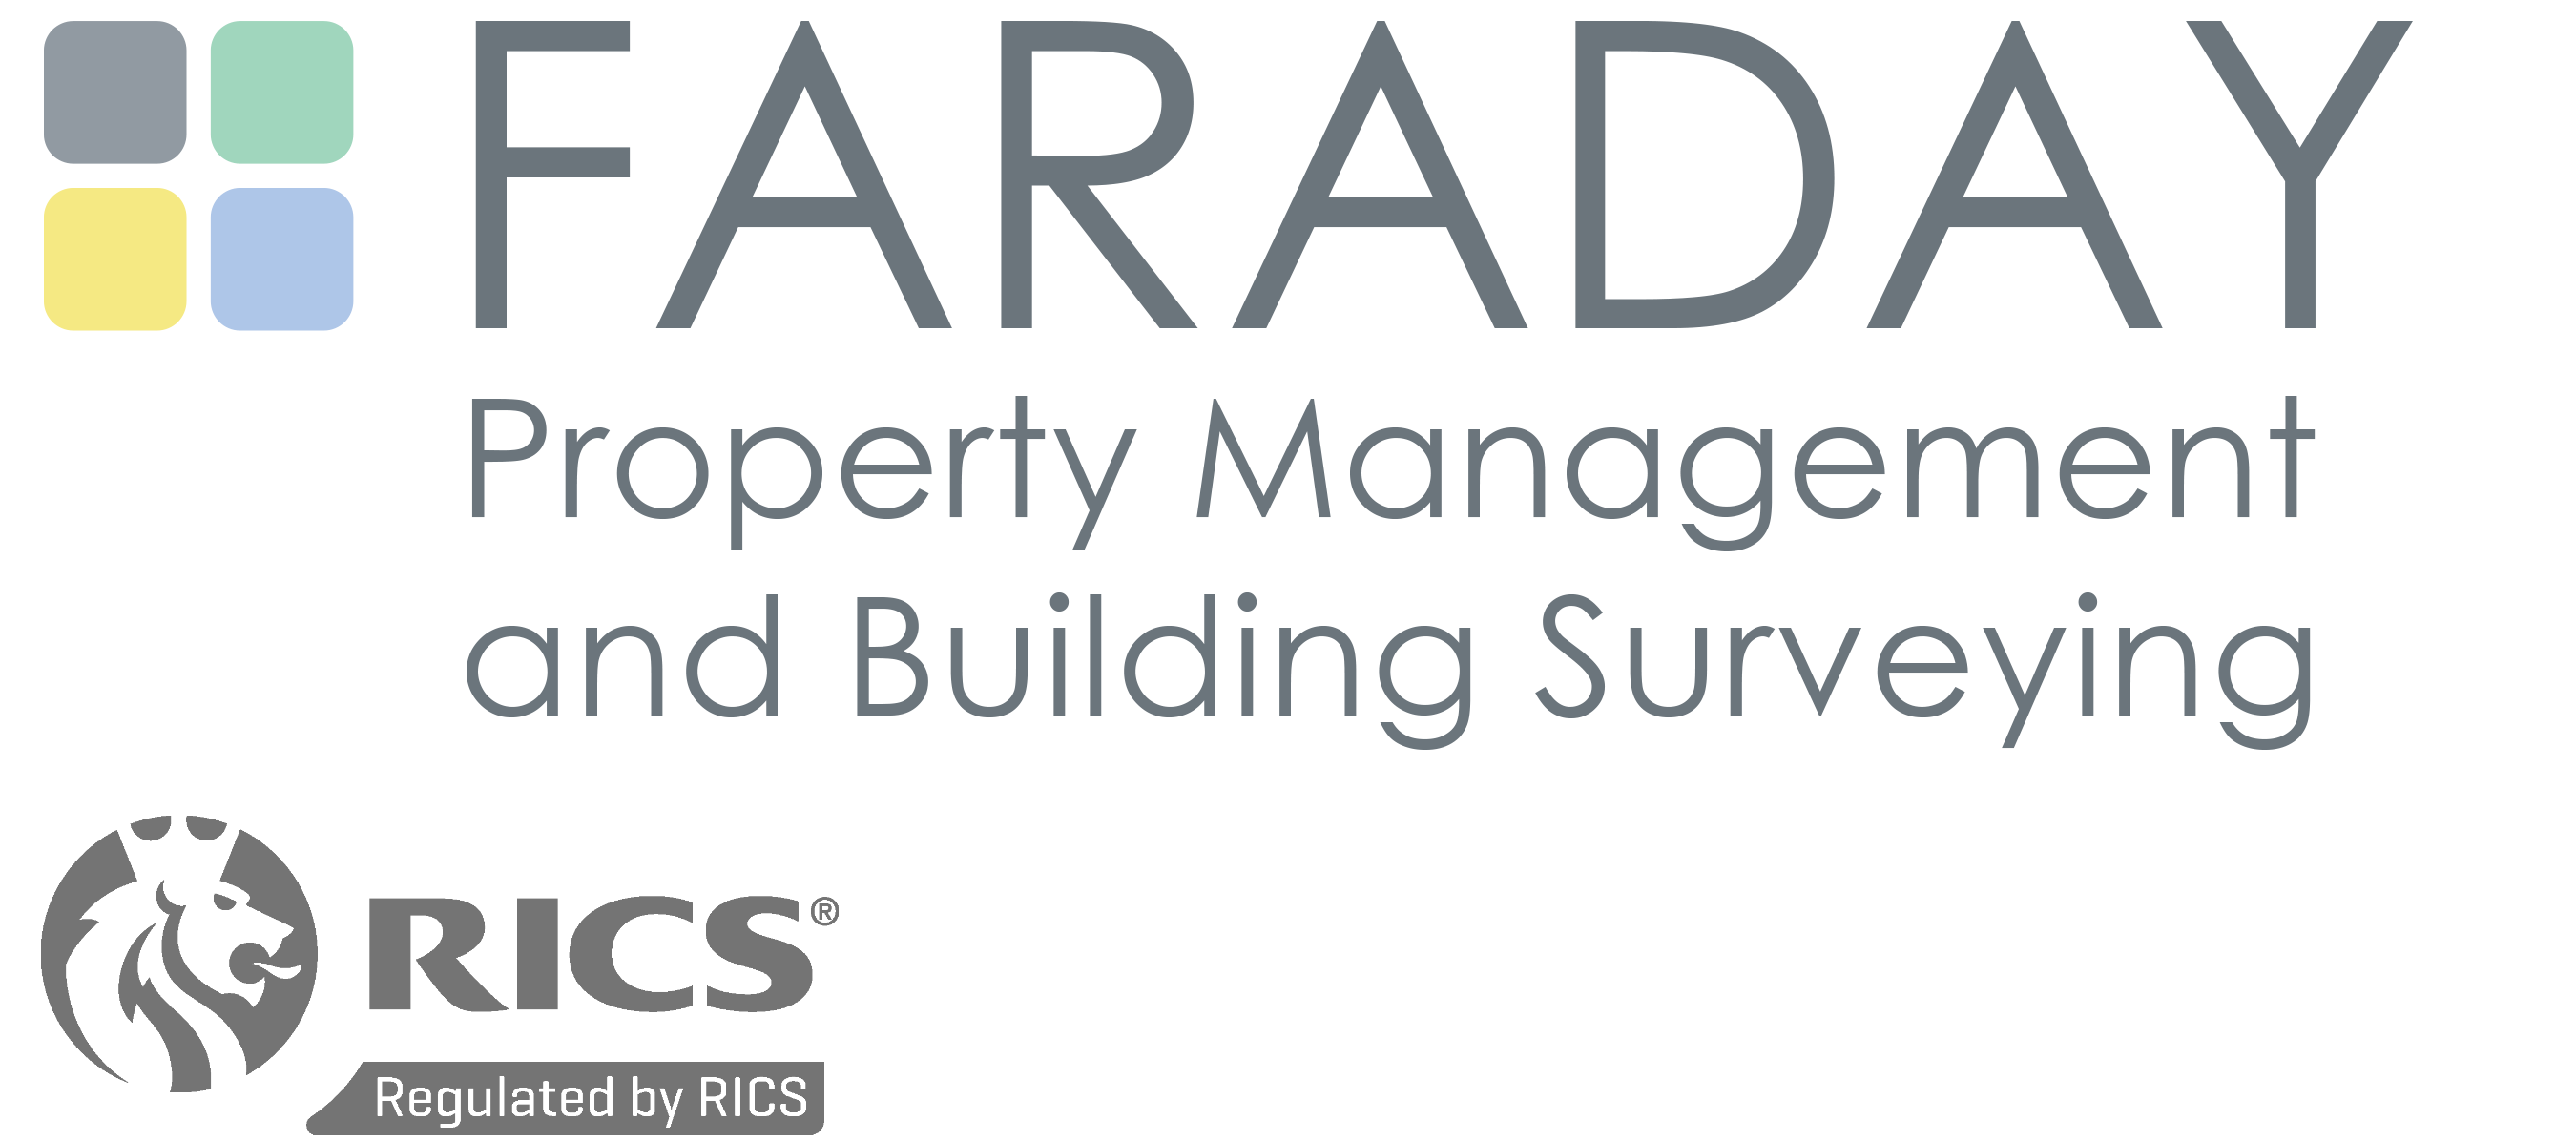 Faraday Property Management & Building Surveying